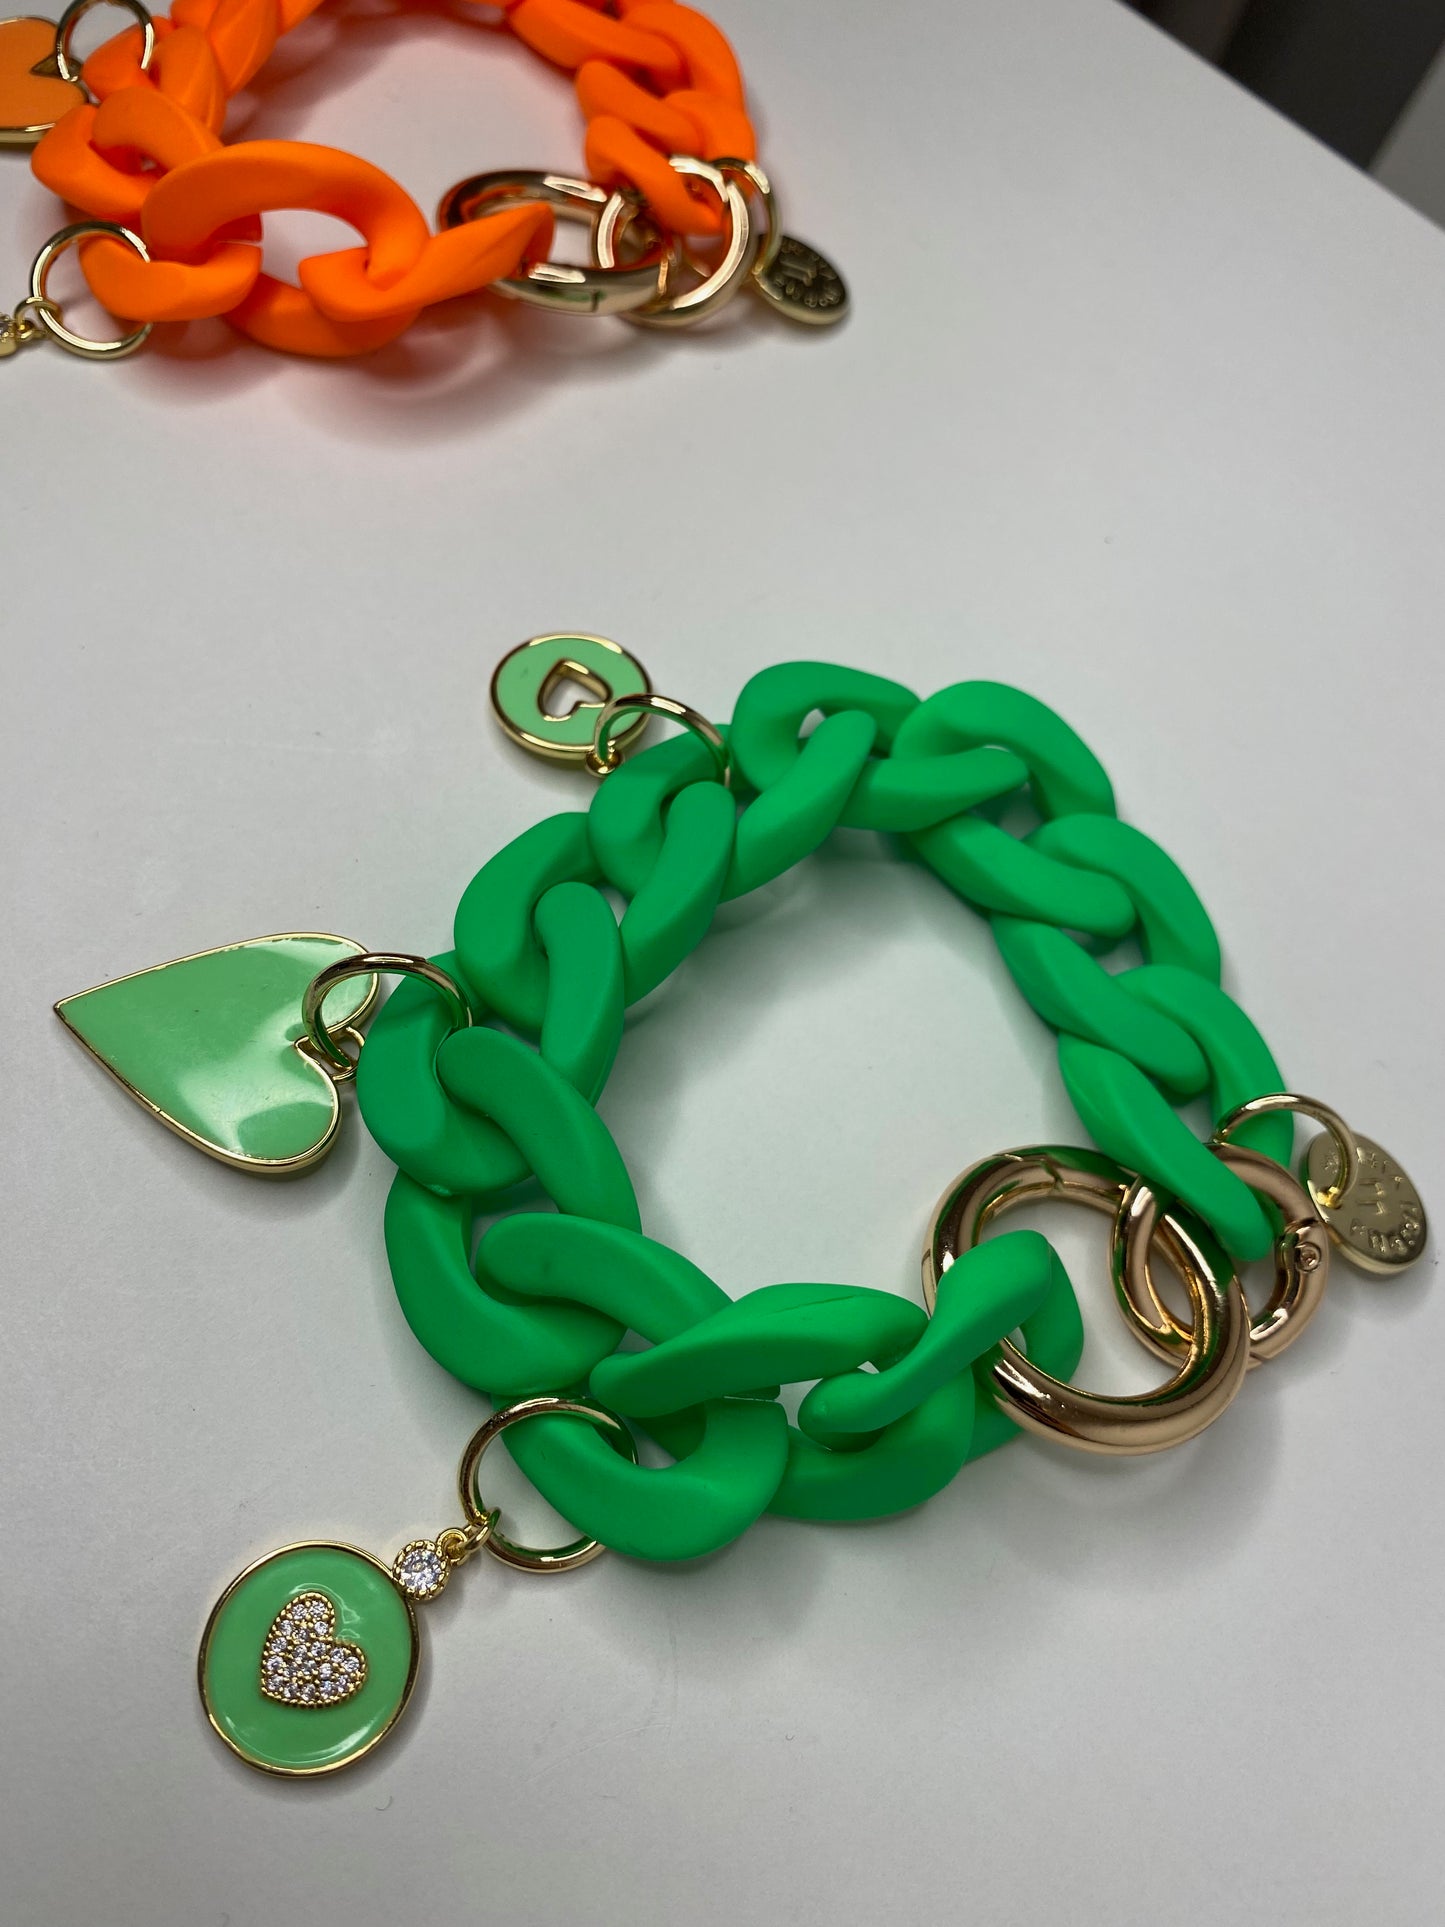 Bracelet Cecile Hearts Neon Green